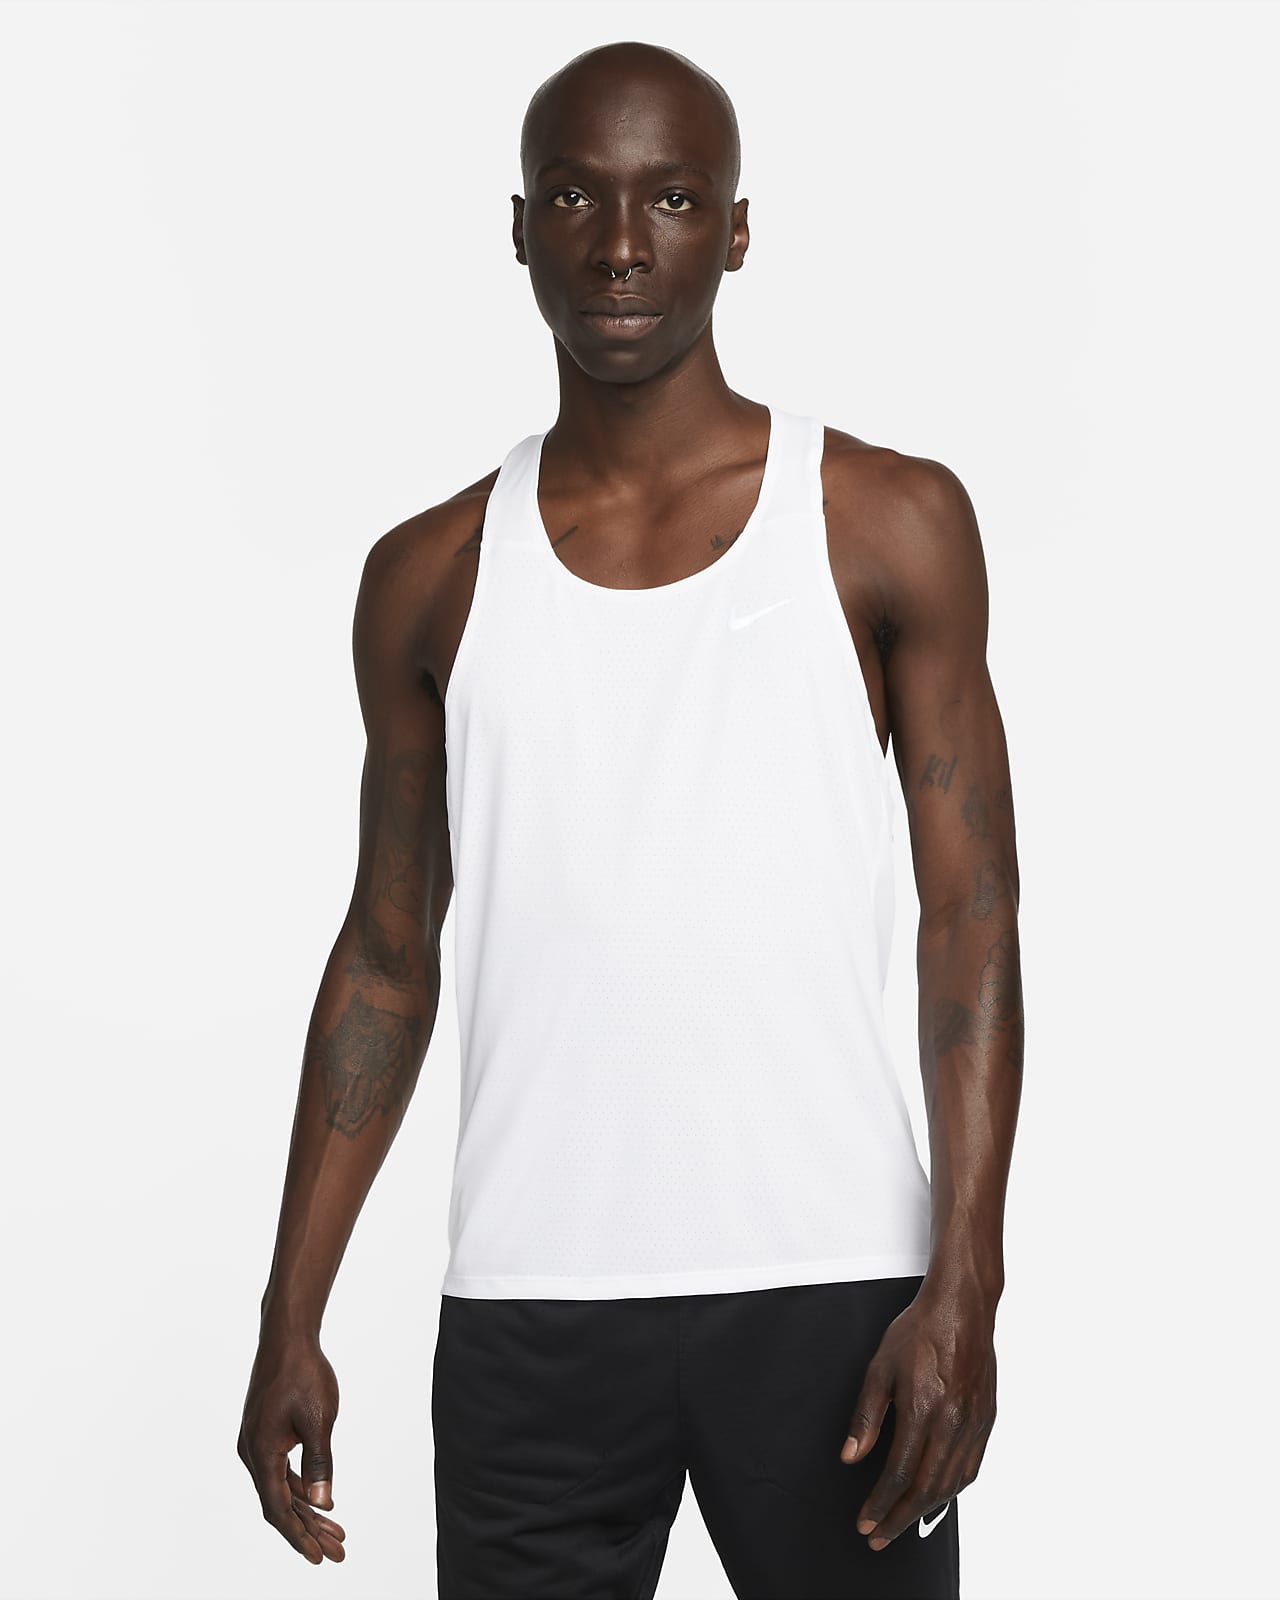 Camiseta sin mangas para carrera Nike Dri-FIT Fast para hombre